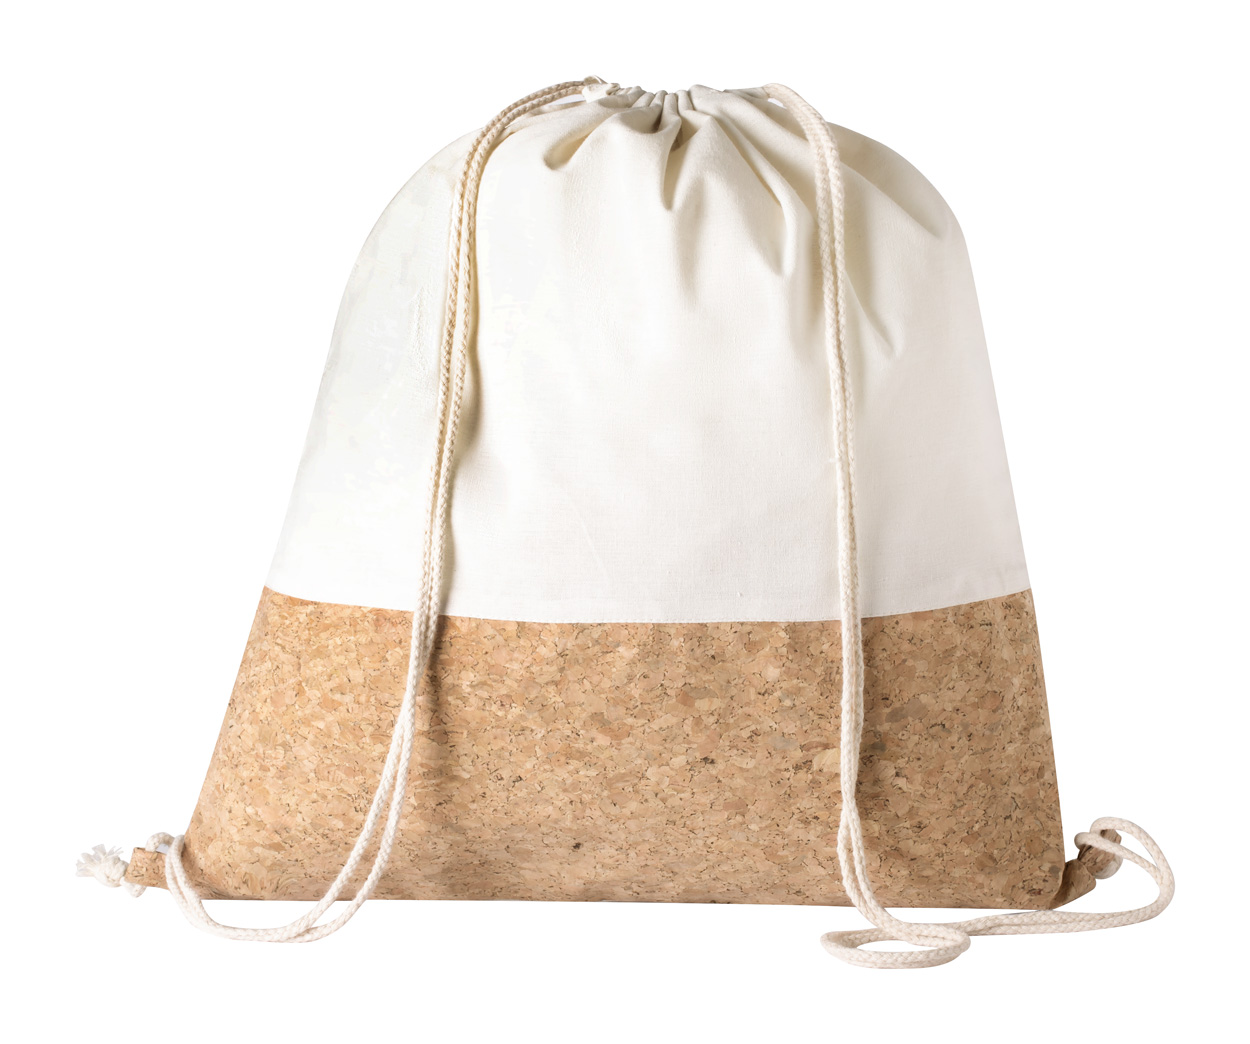 Cotton drawstring backpack GALSIN with cork bottom - beige / natural